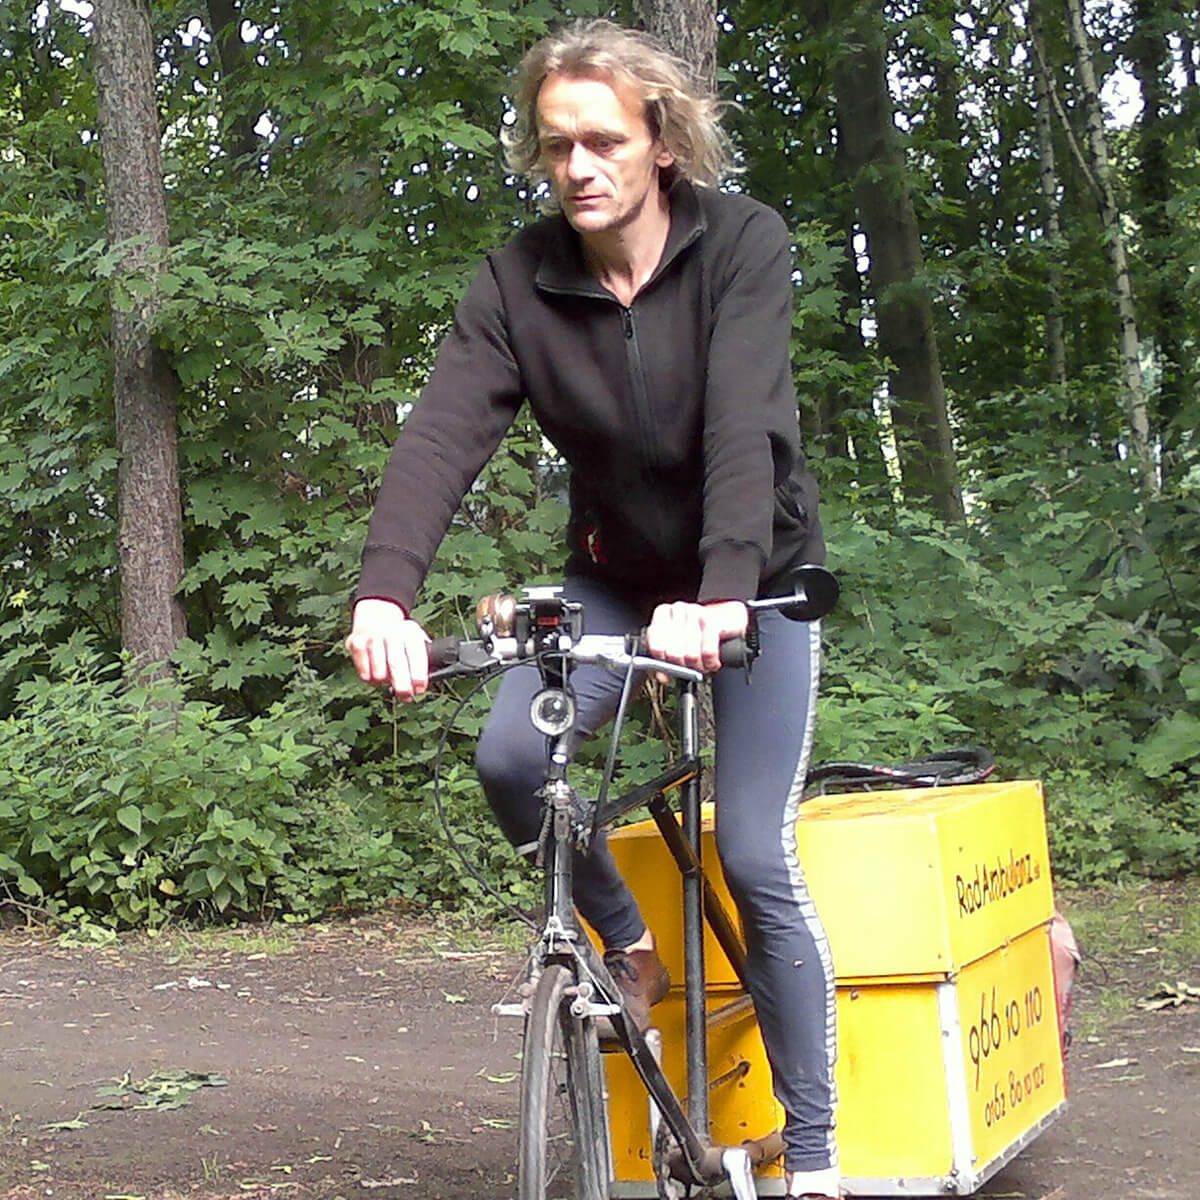 Me on my cargo bike